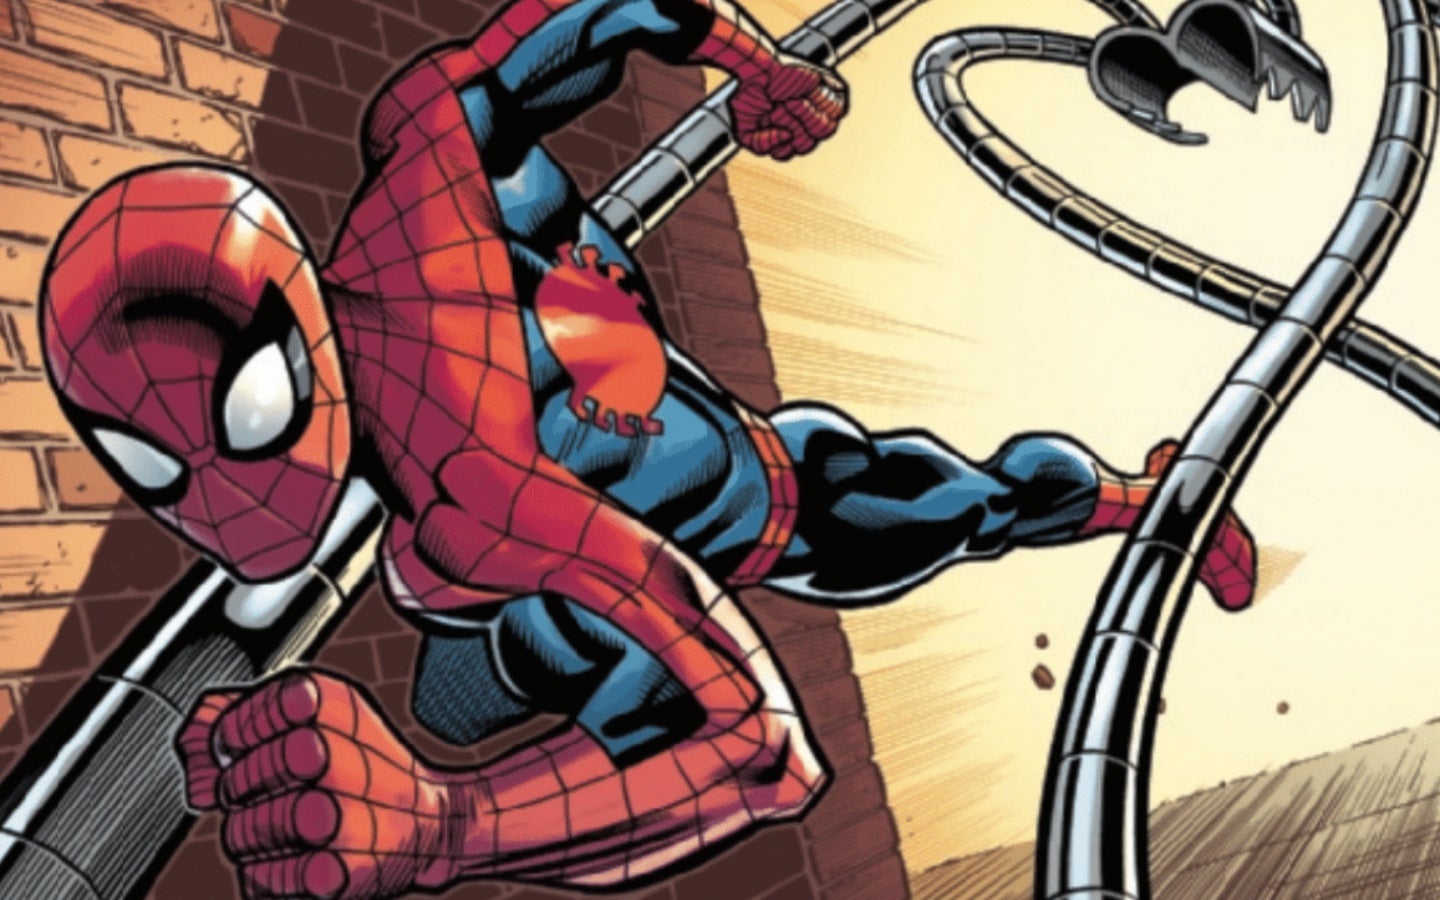 Spider-Man showcasing Doc Ock arms